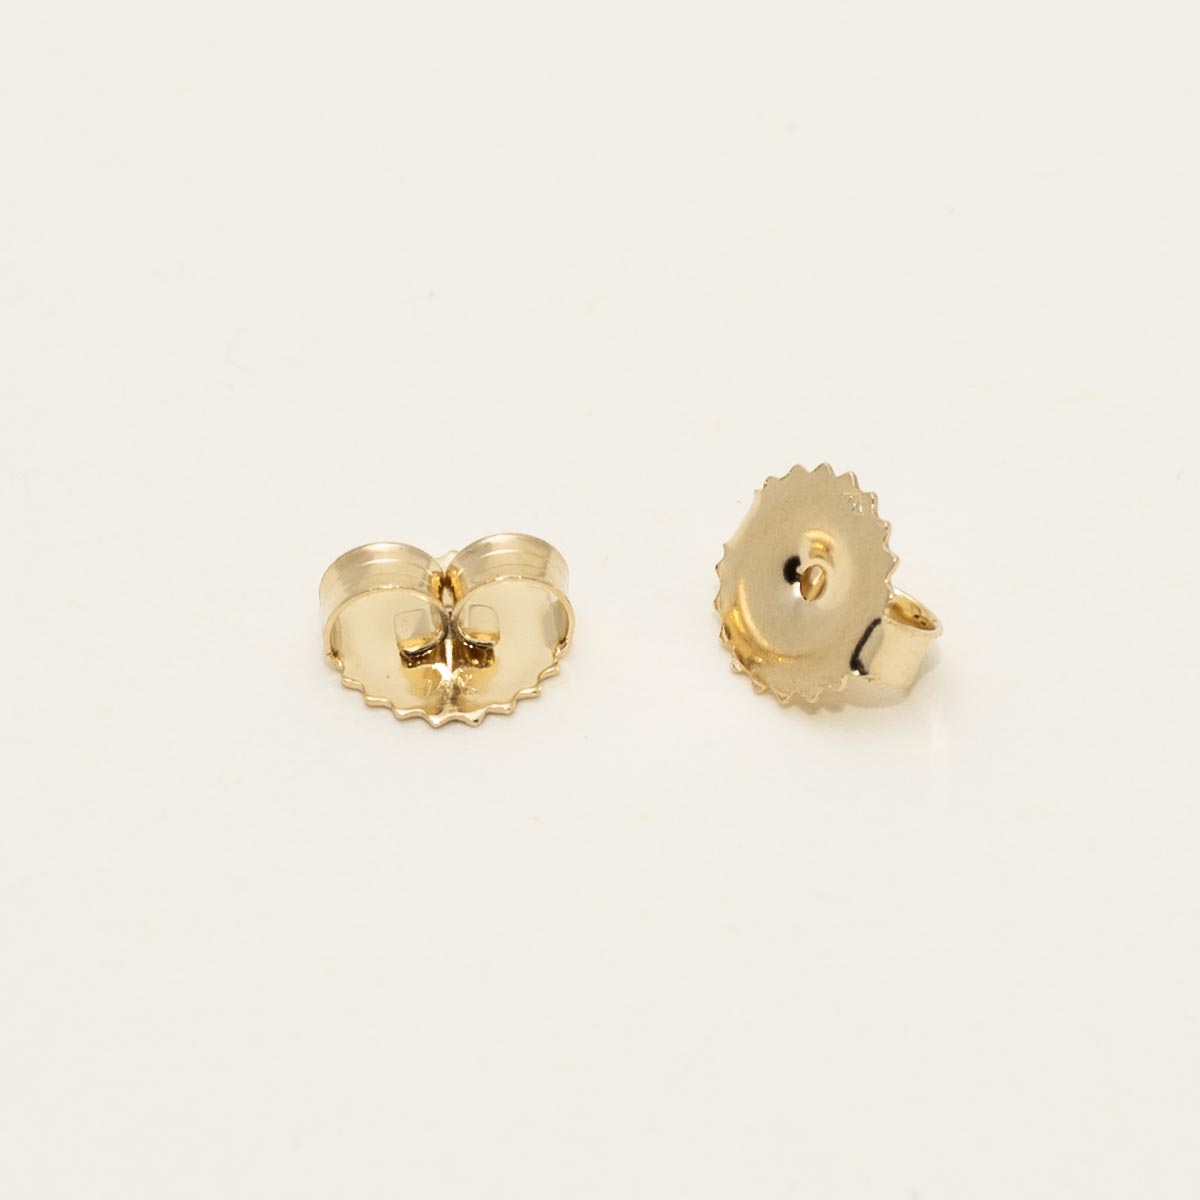 Mastoloni Cultured Akoya Pearl Stud Earrings in 14kt Yellow Gold (8-8.5mm pearls)